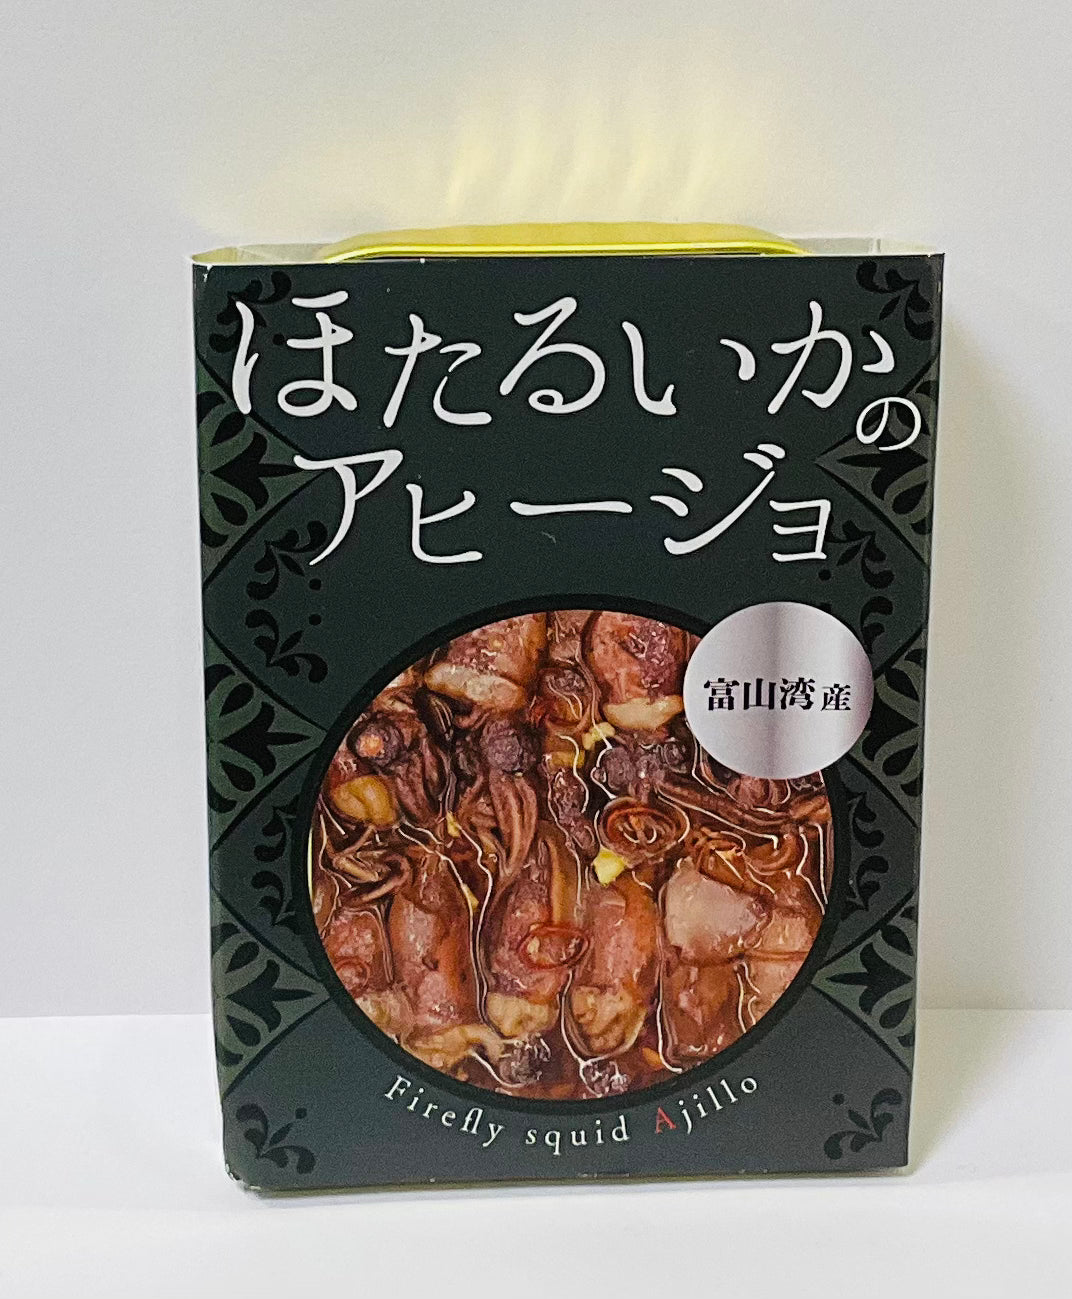 Firefly squid ajillo from Toyama Prefecture